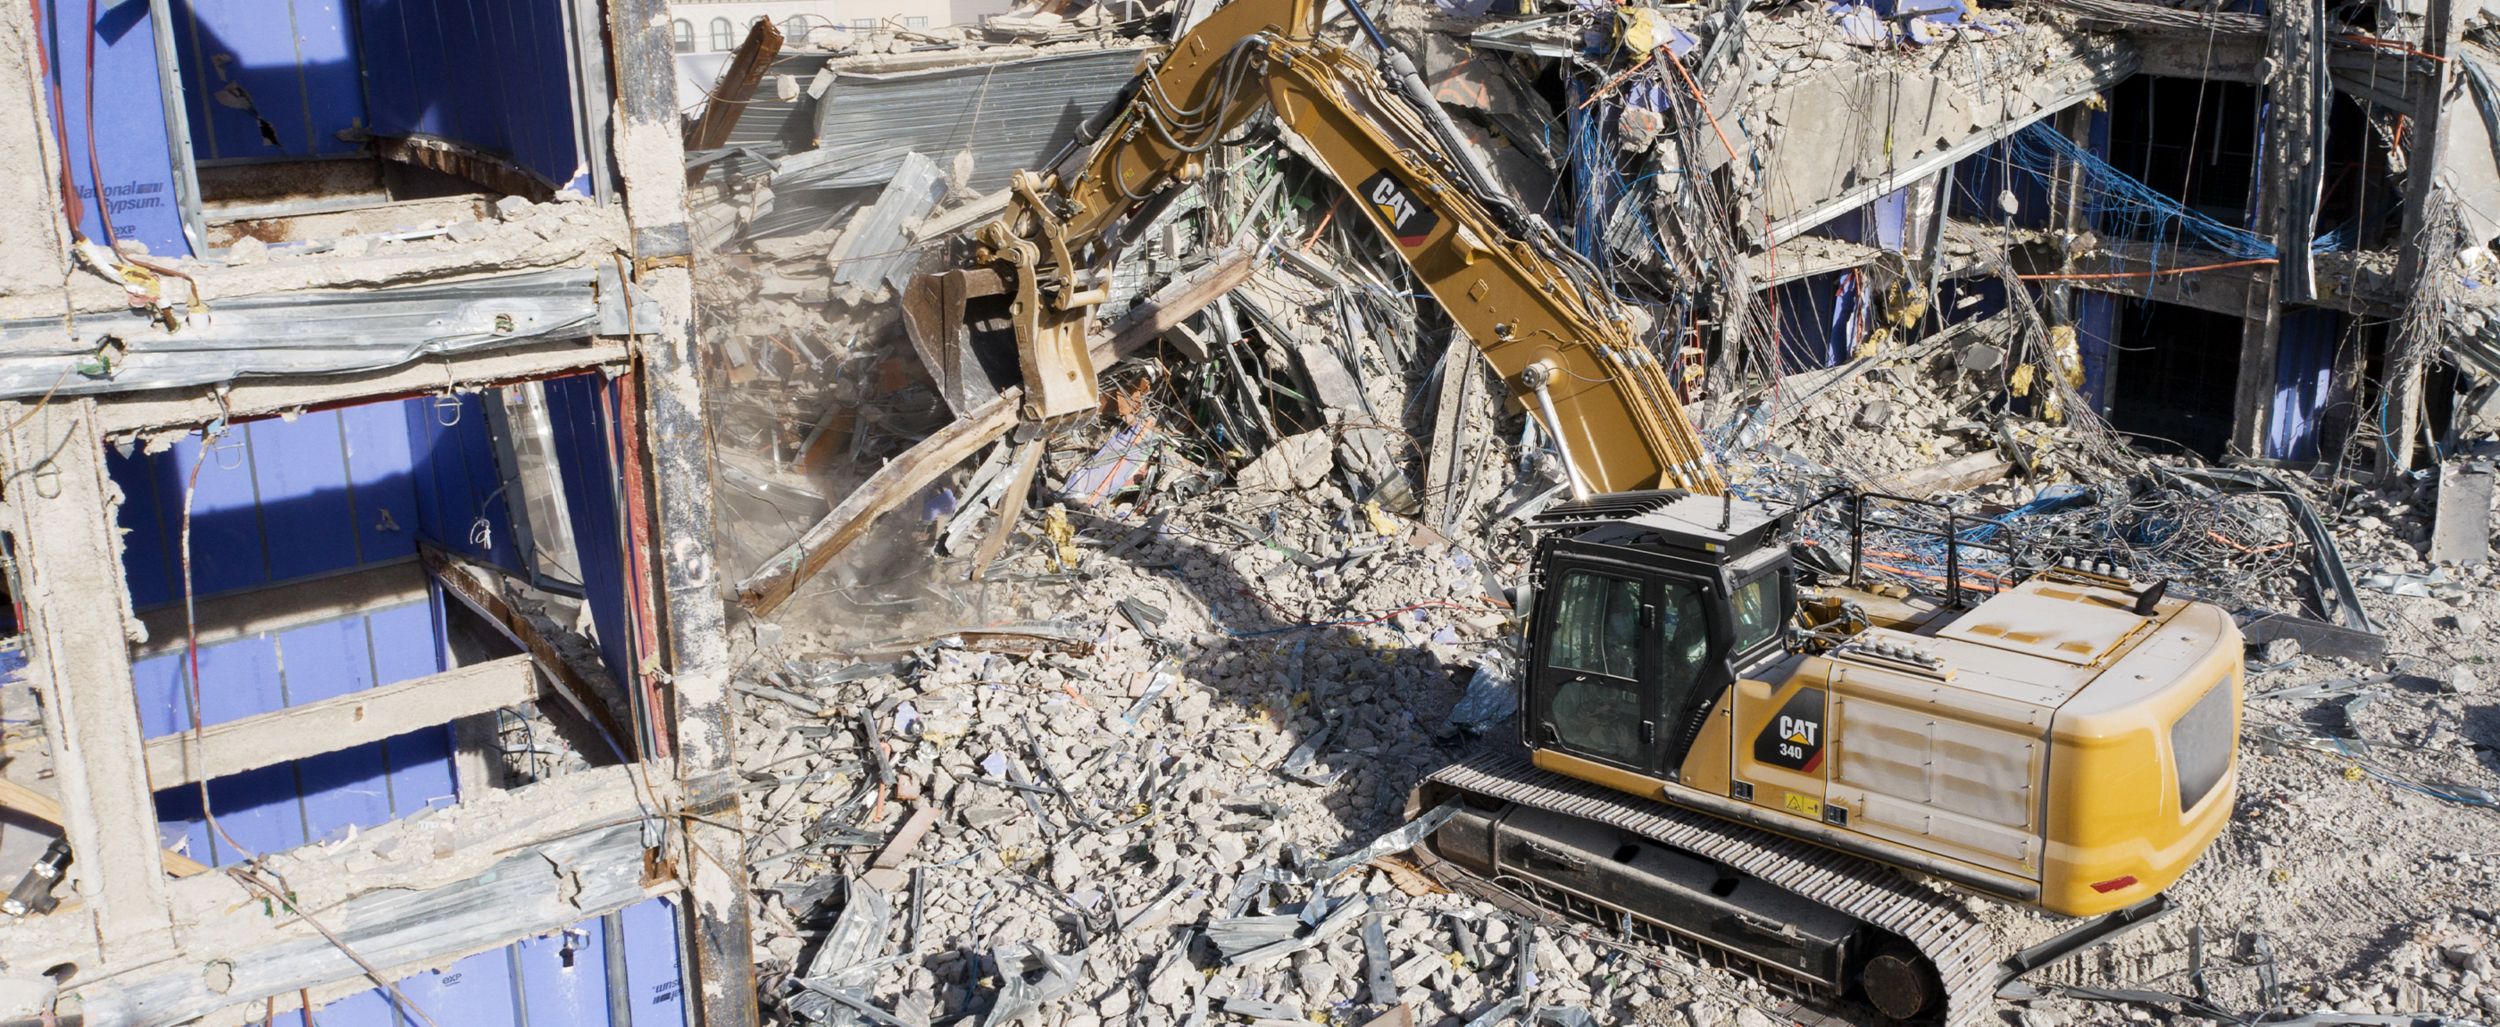 Best Types of Heavy Equipment for Demolition